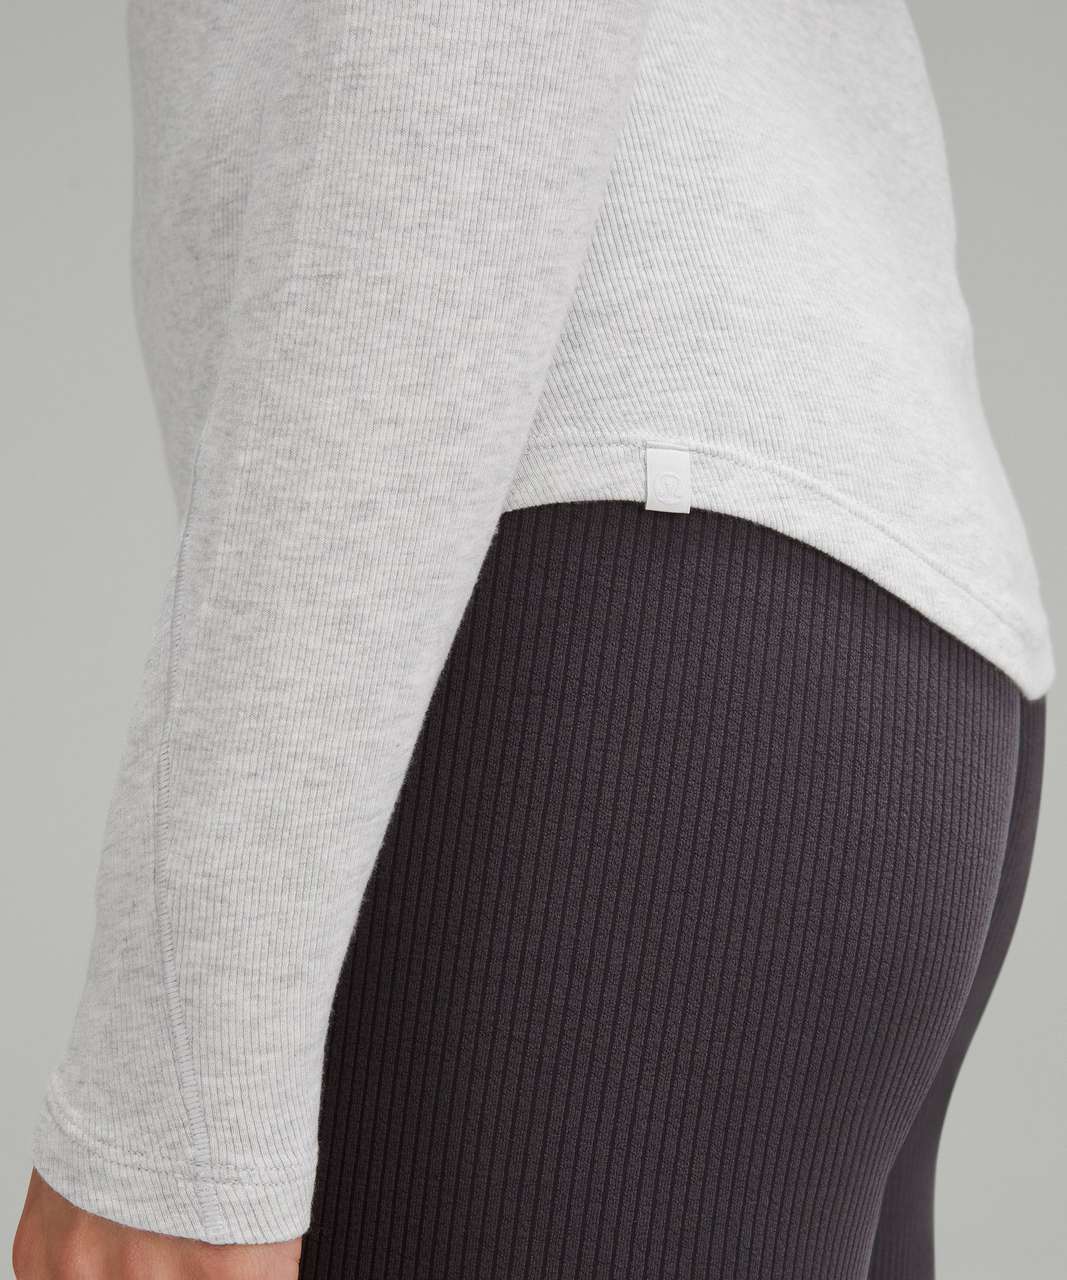 Lululemon Hold Tight Long-Sleeve Shirt - Heathered Core Ultra Light Grey